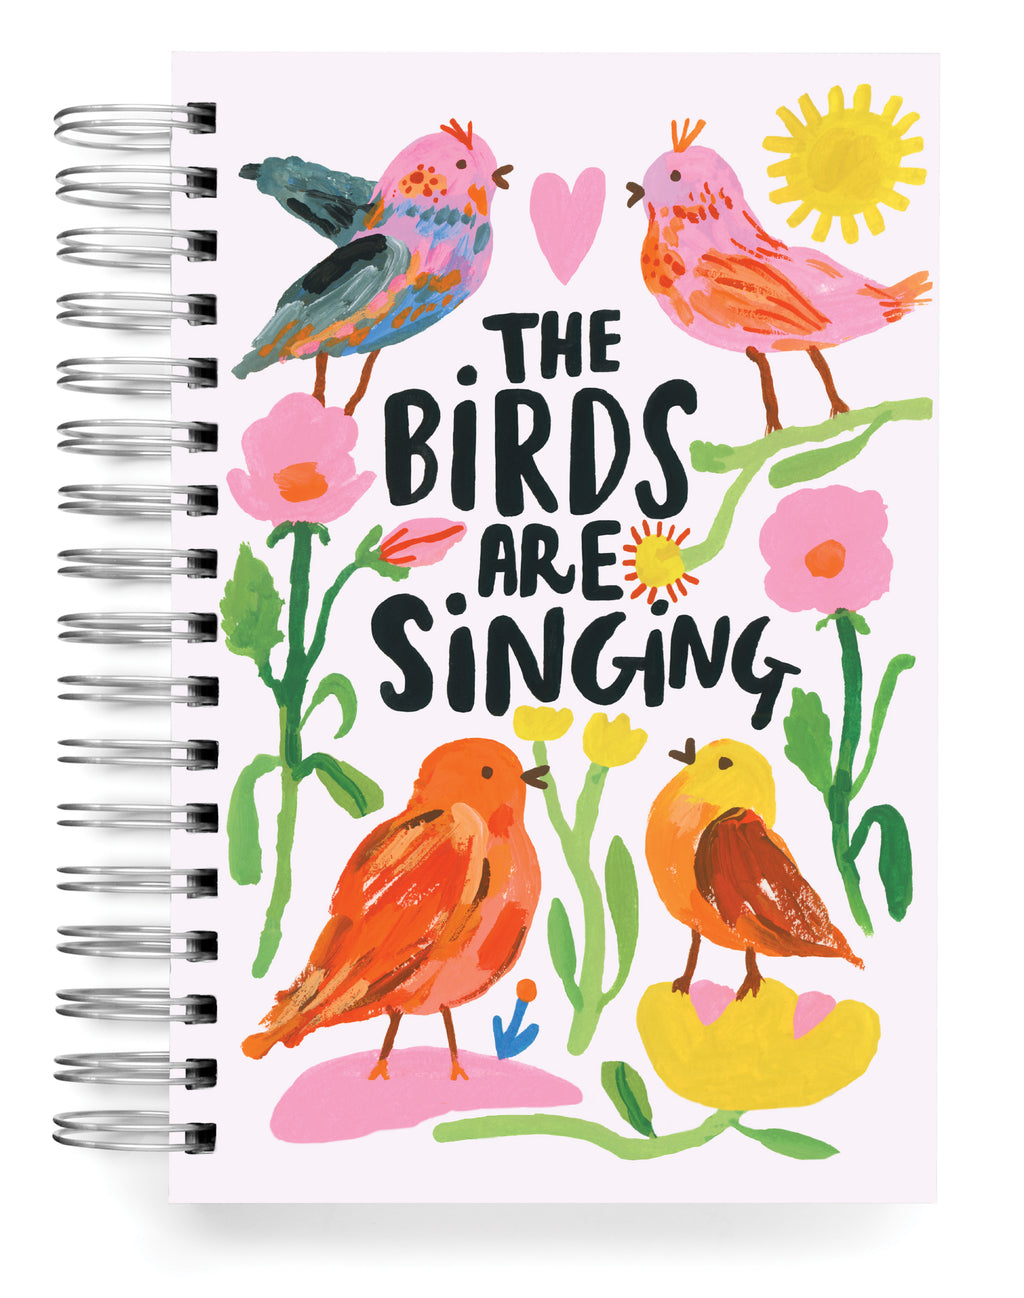 The Birds are singing jumbo journal